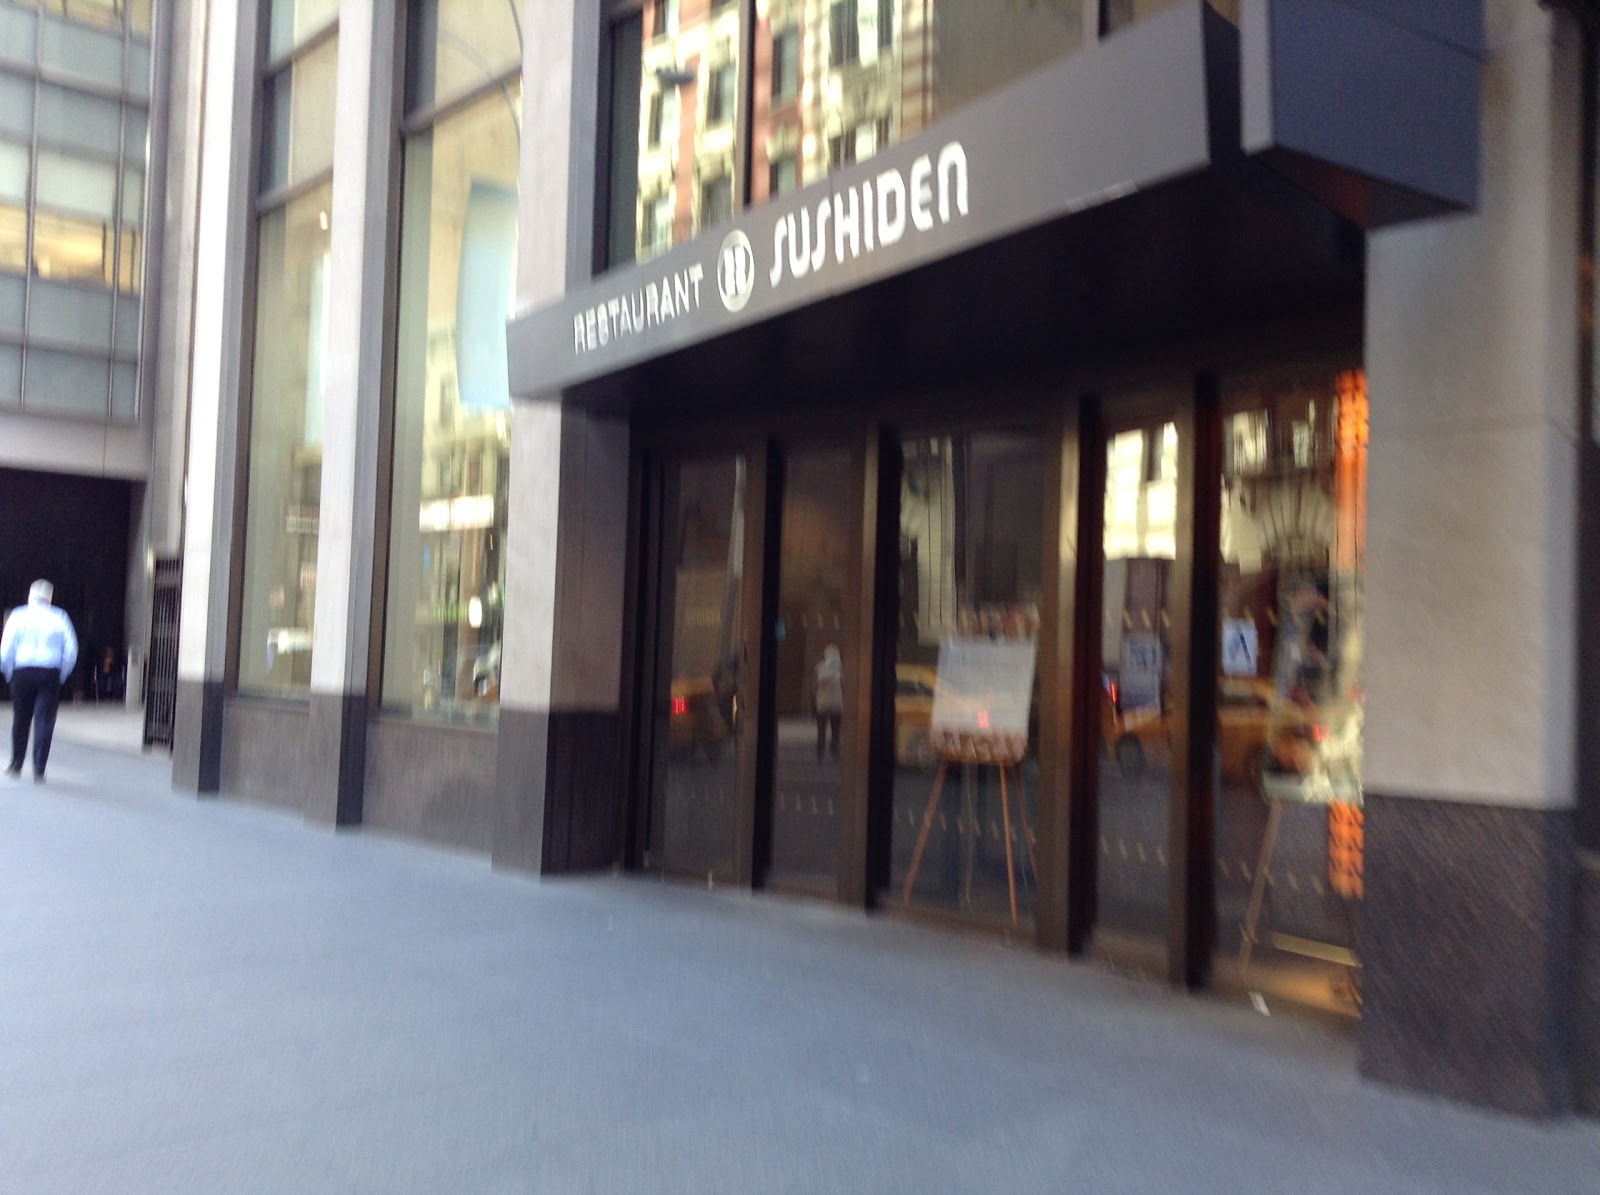 Photo of Sushiden in Manhattan City, New York, United States - 1 Picture of Restaurant, Food, Point of interest, Establishment